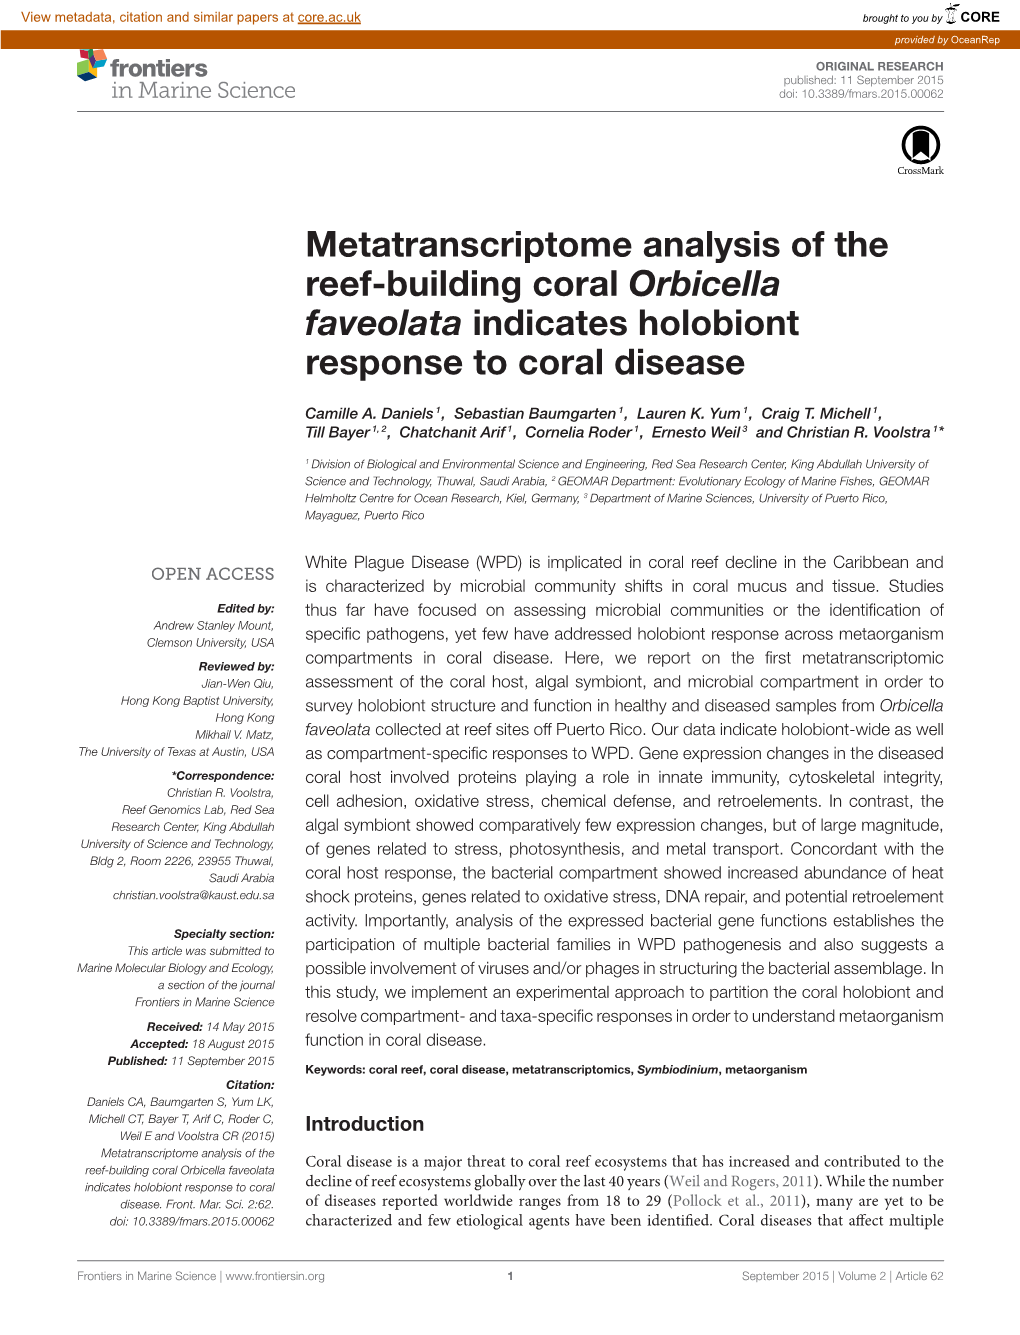 Metatranscriptome Analysis of the Reef-Building Coral Orbicella Faveolata Indicates Holobiont Response to Coral Disease